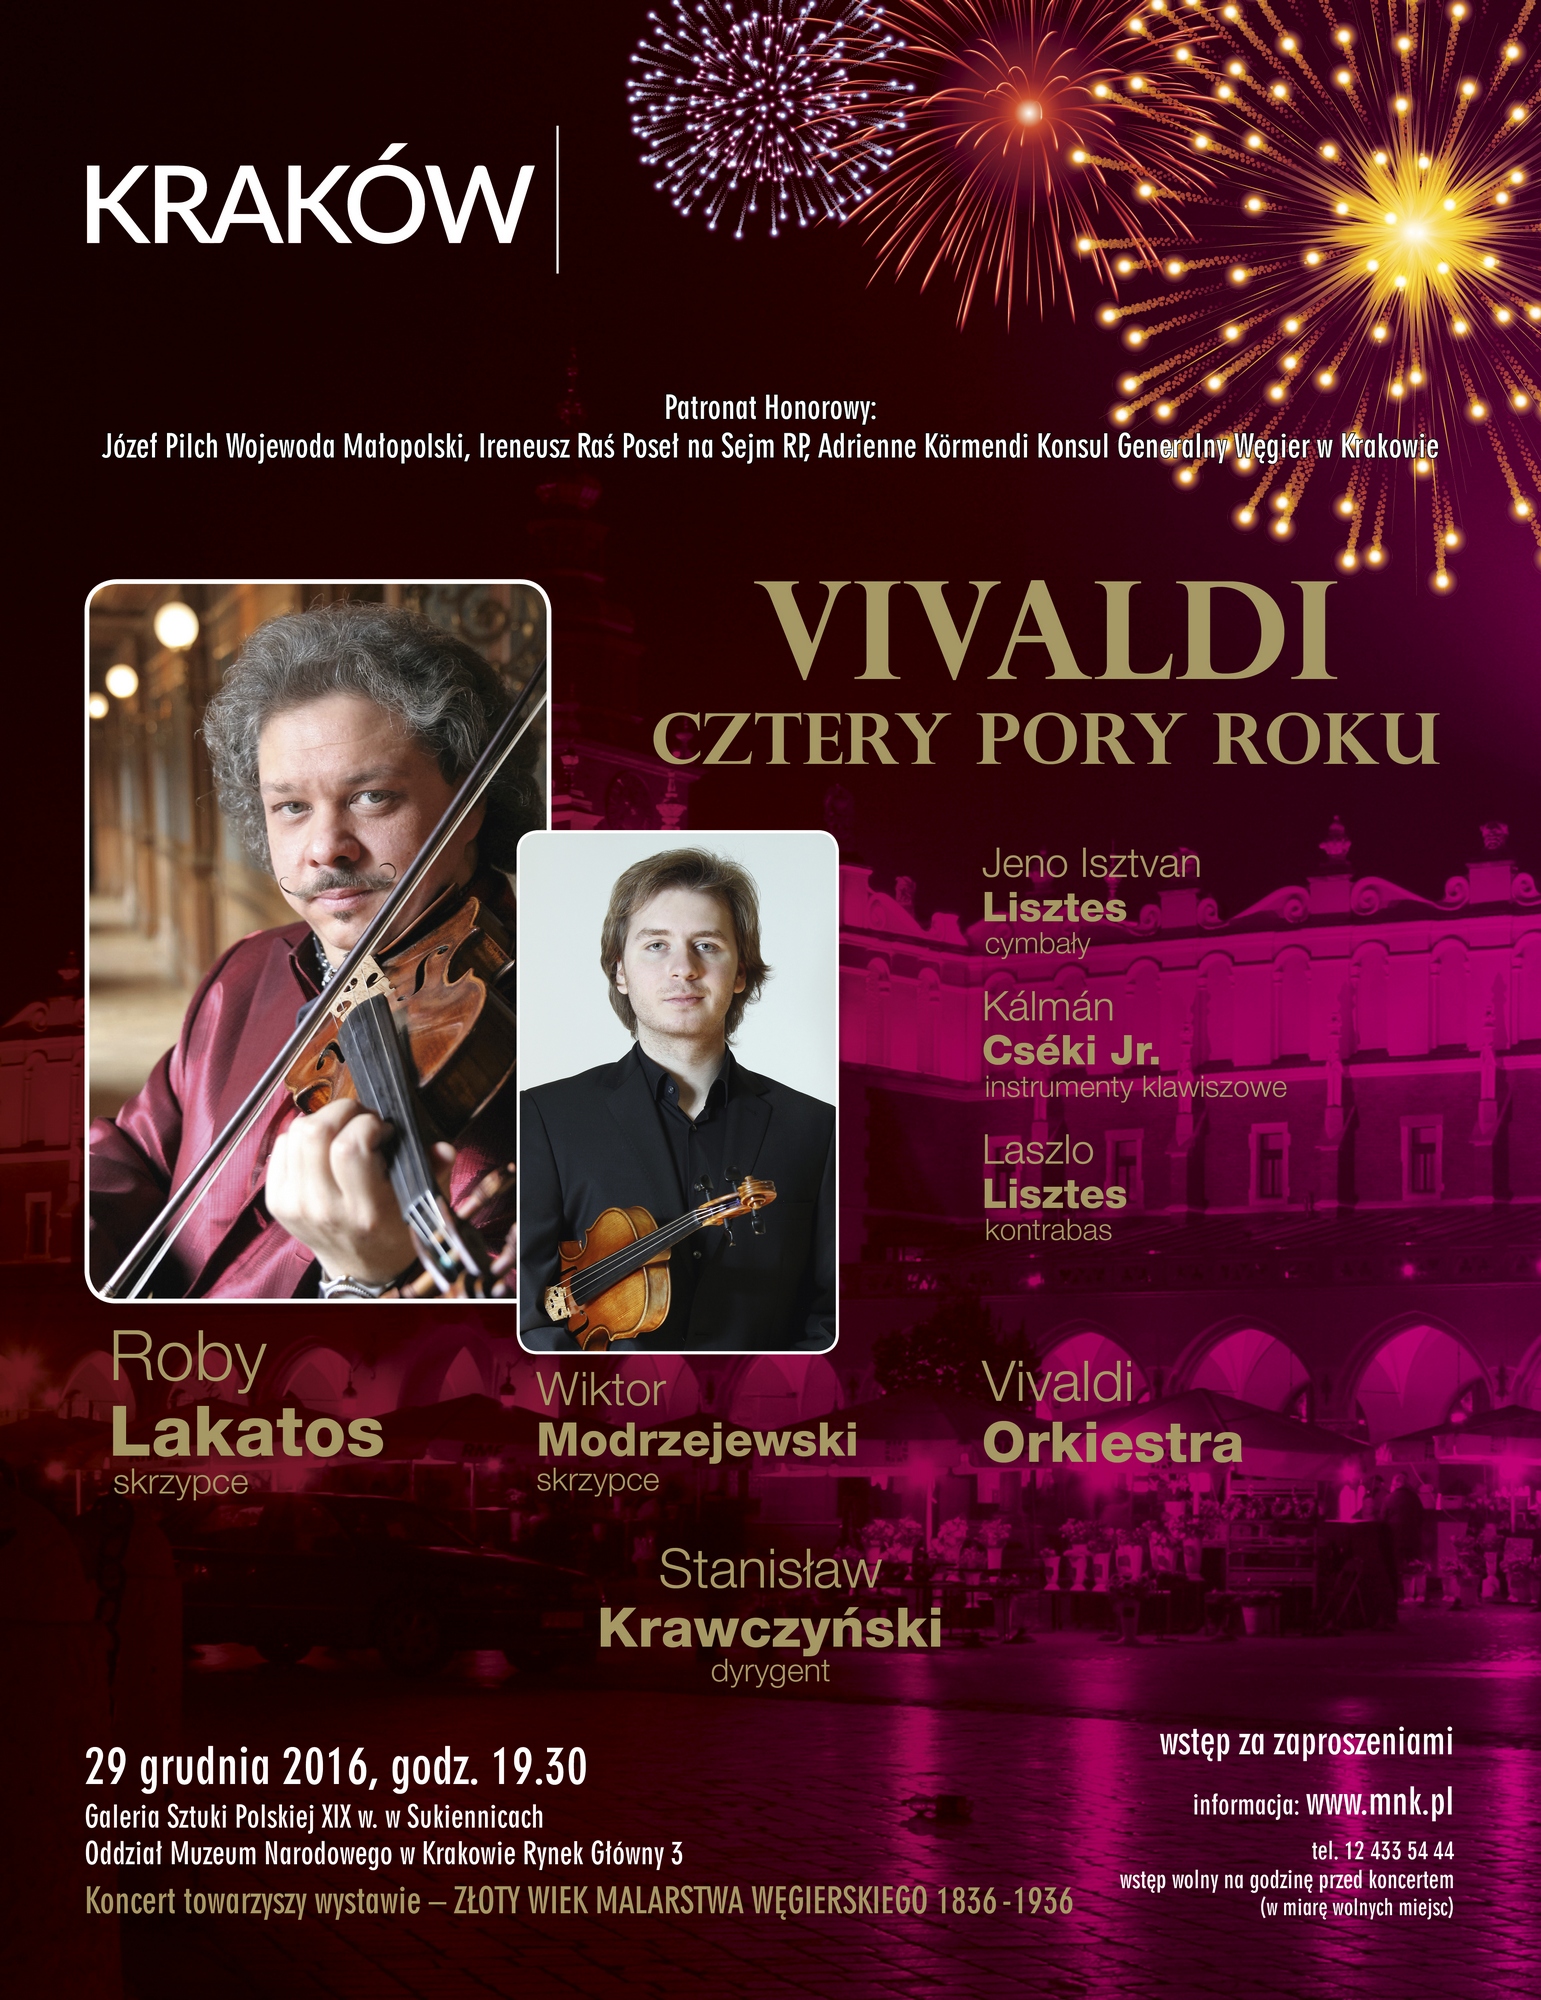 „Vivaldi Cztery pory roku” – plakat (źródło: materiały prasowe organizatora)